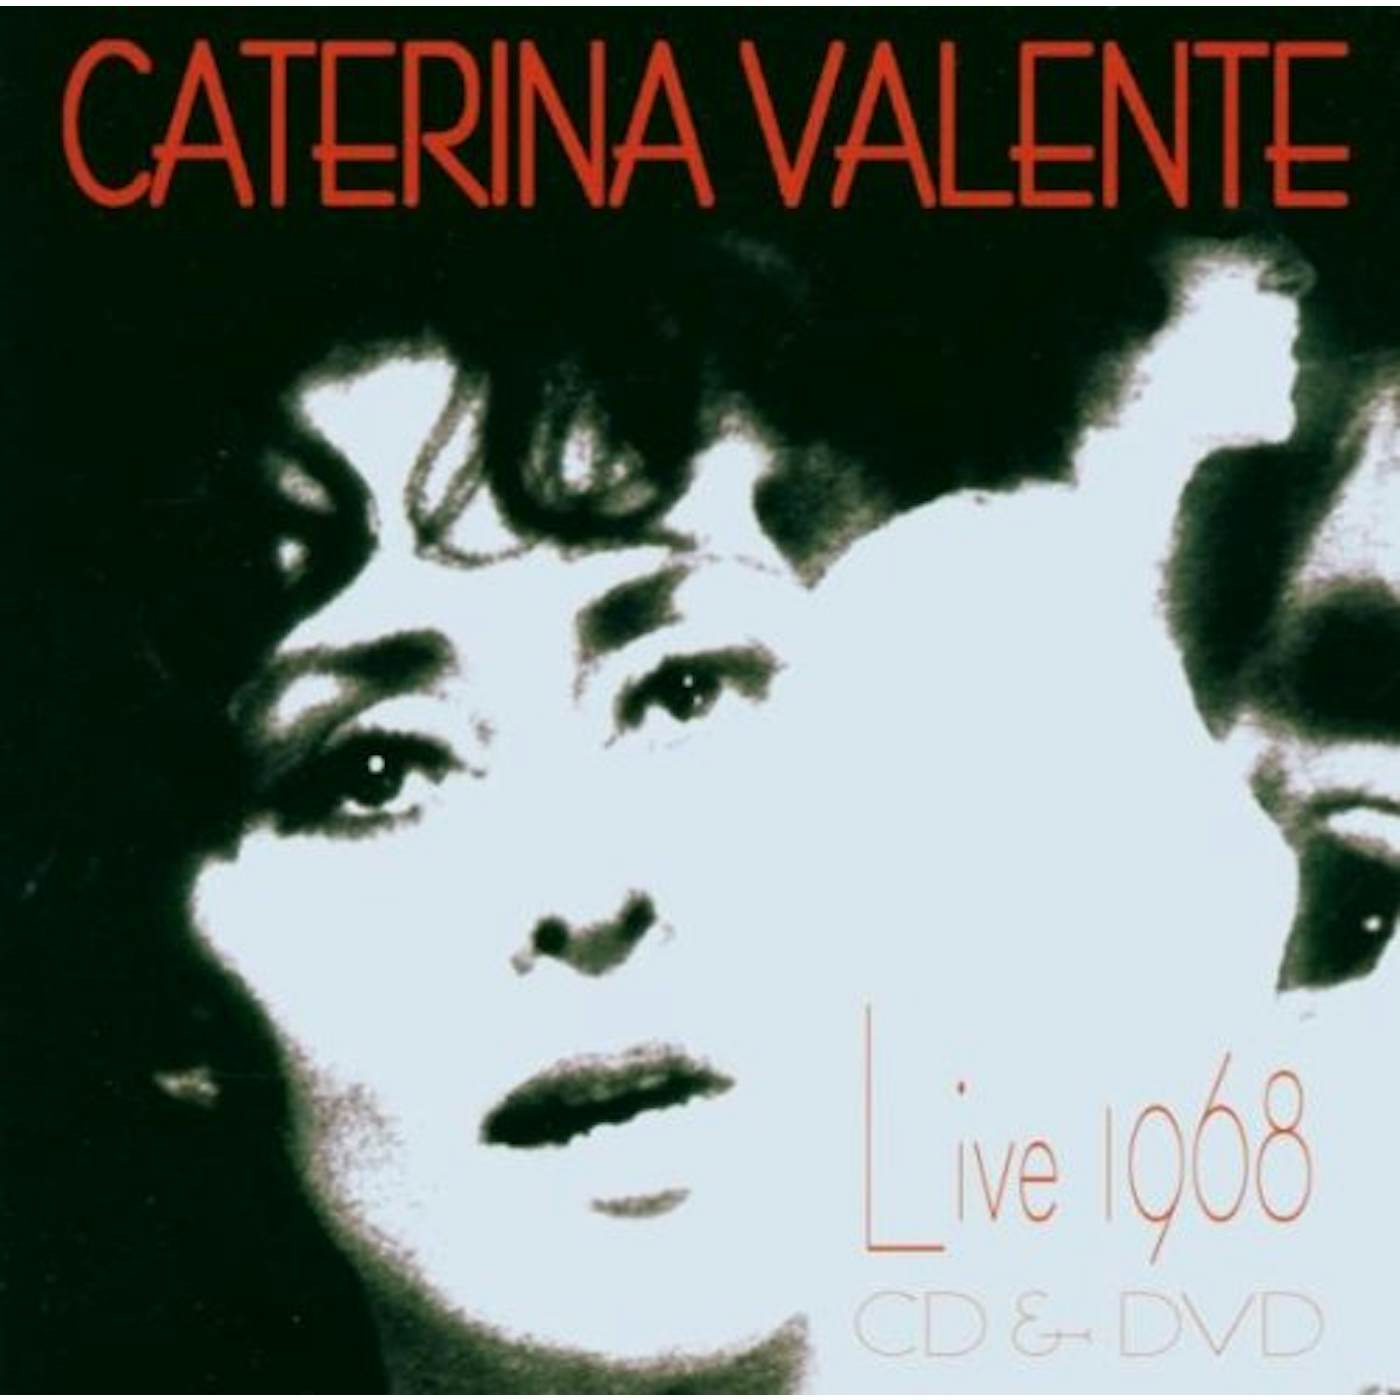 Caterina Valente LIVE 1968 CD